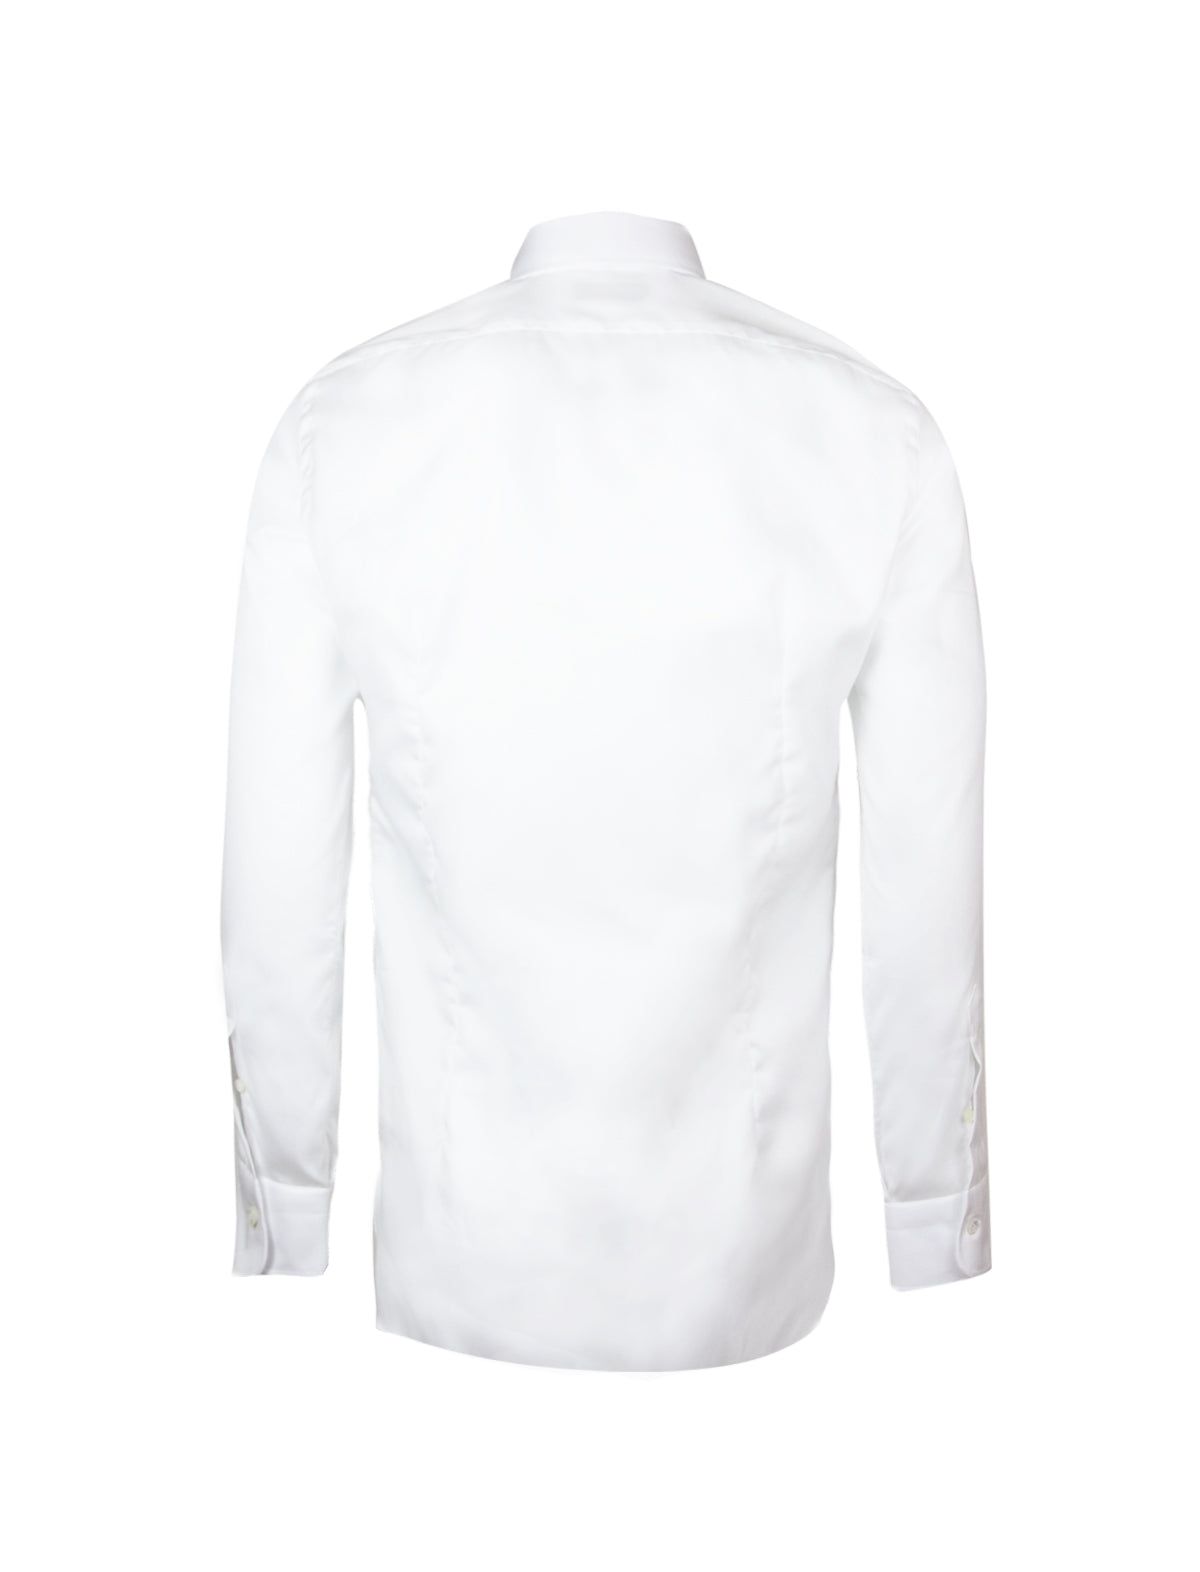 Barba Napoli Crisp Cotton Shirt in White